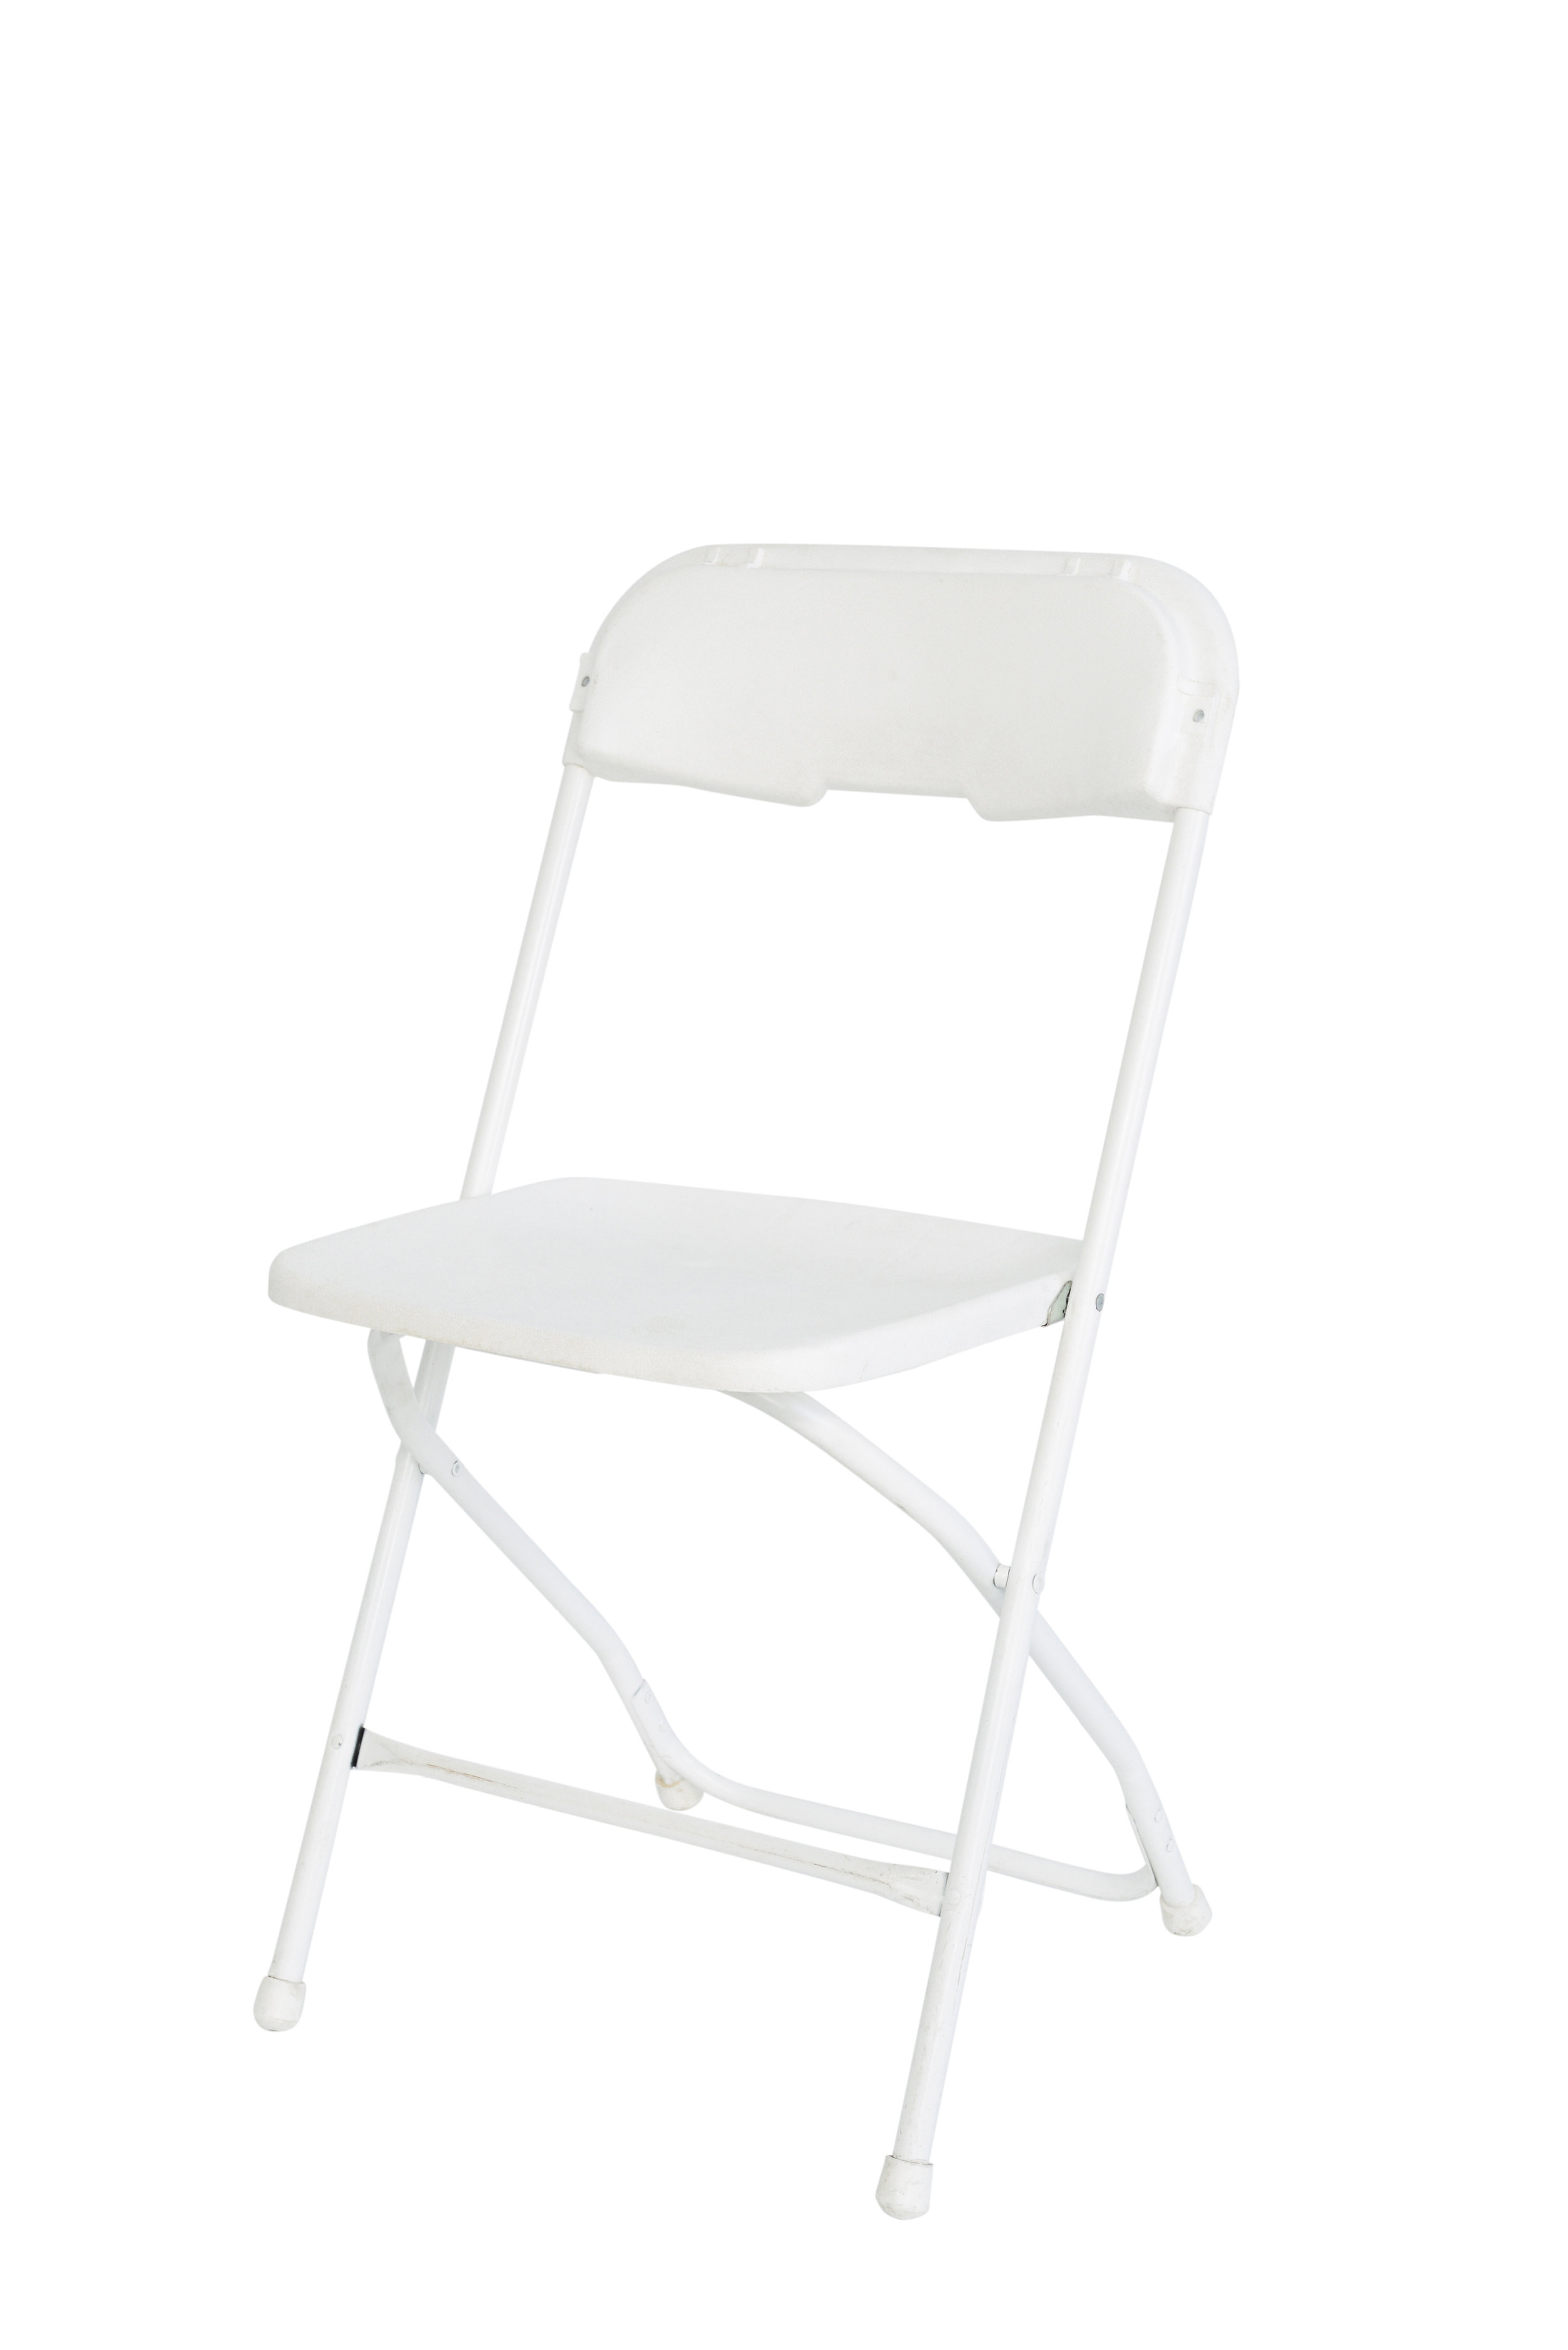 White folding chairs qty. 40